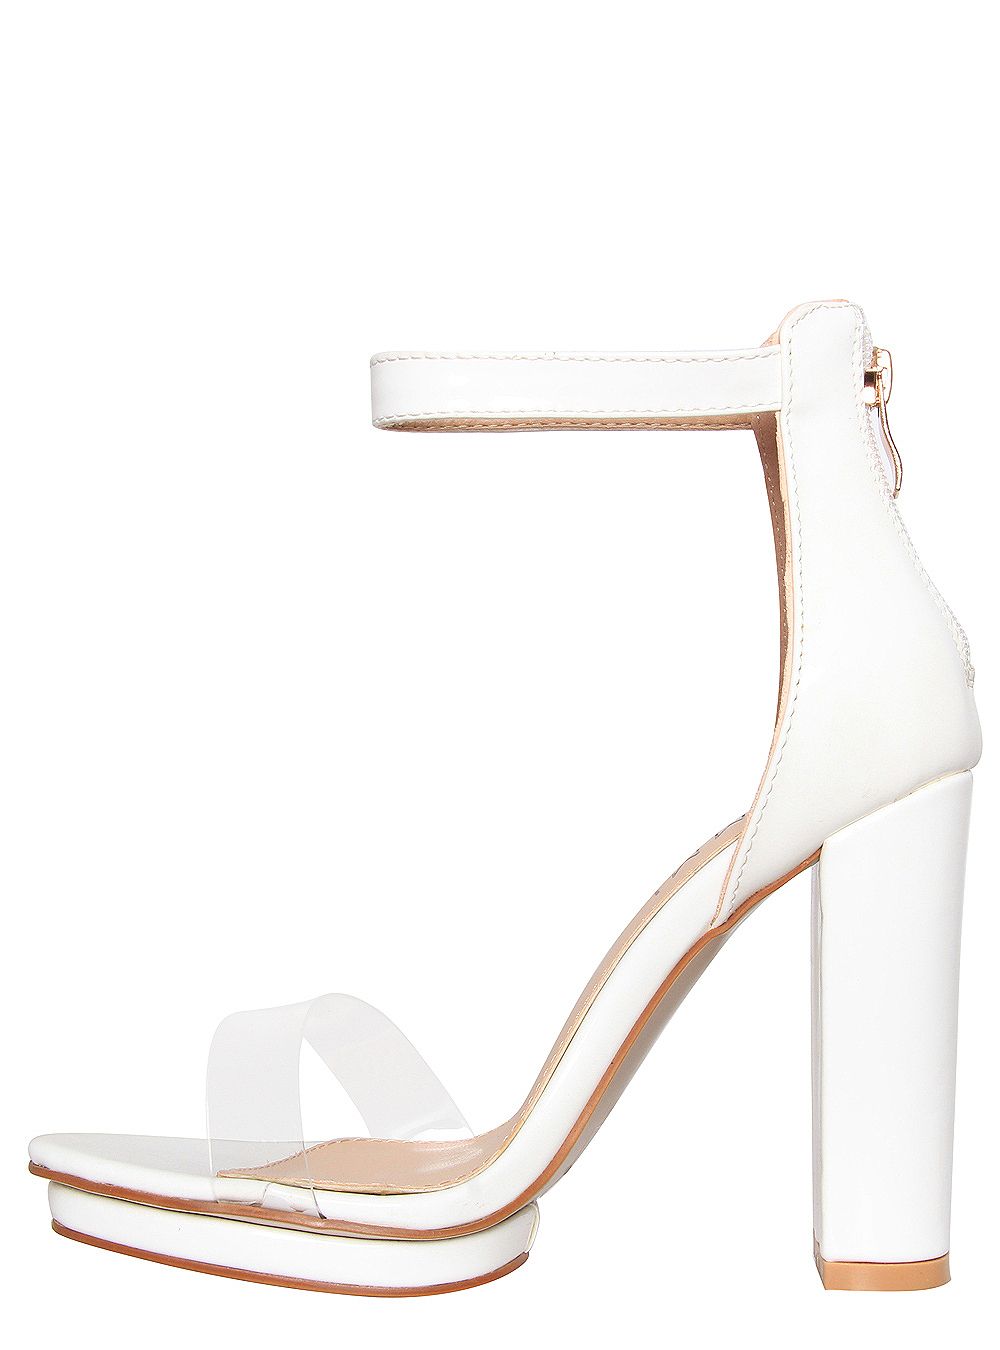 white platform block heels